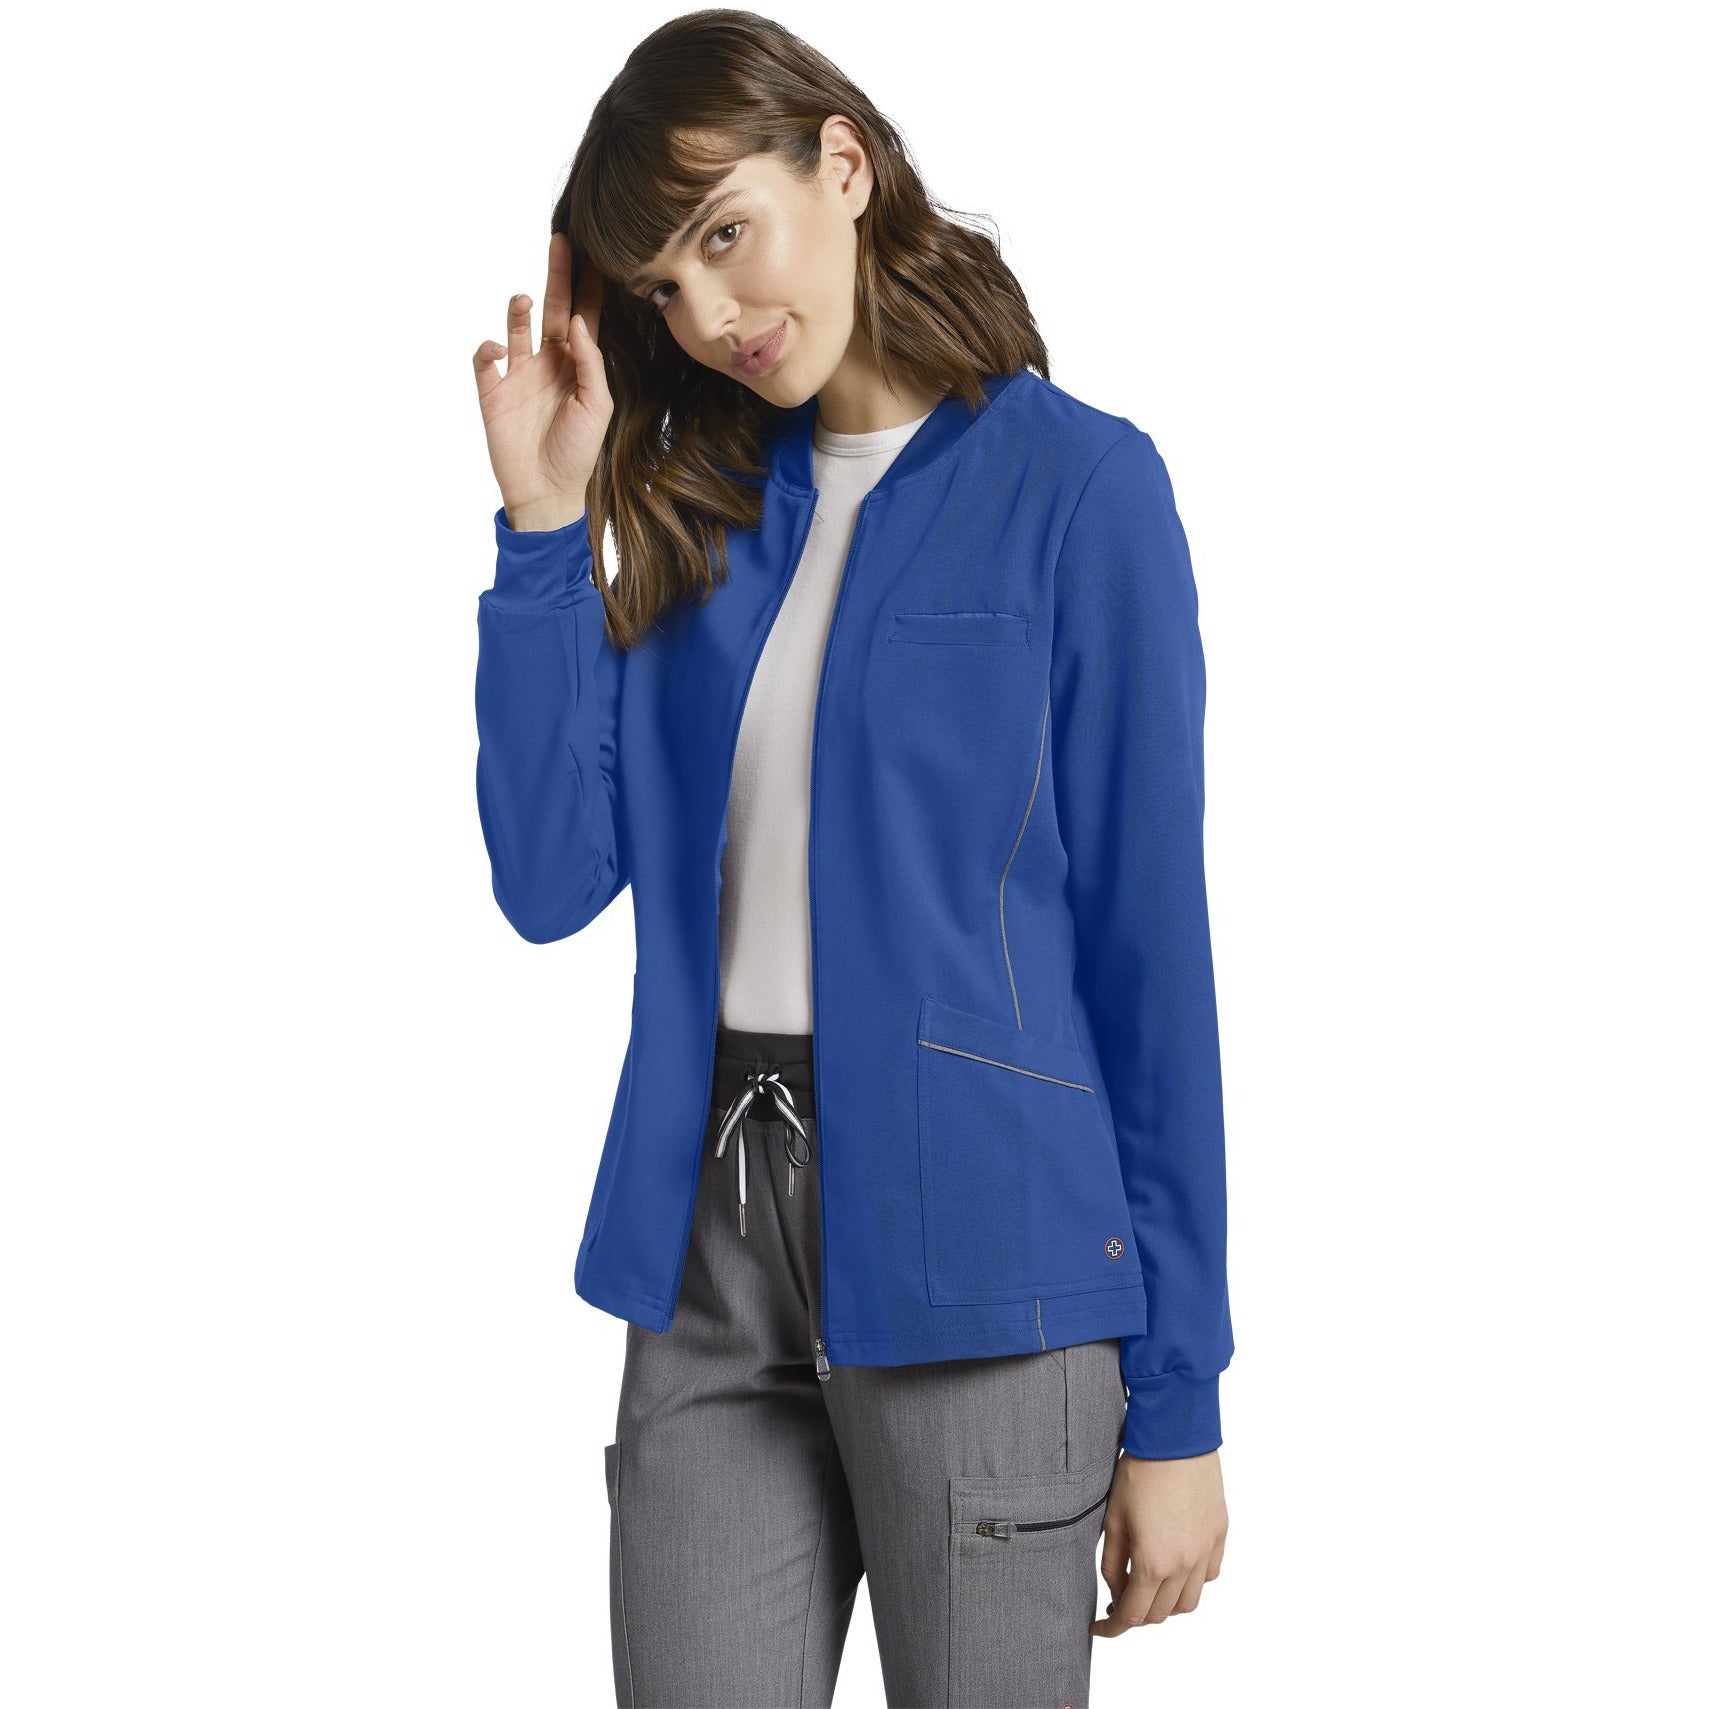 V-TESS Women's Zip Front Jacket & Women's Cargo Scrub Pant 953/337 *COMPLETE SET*